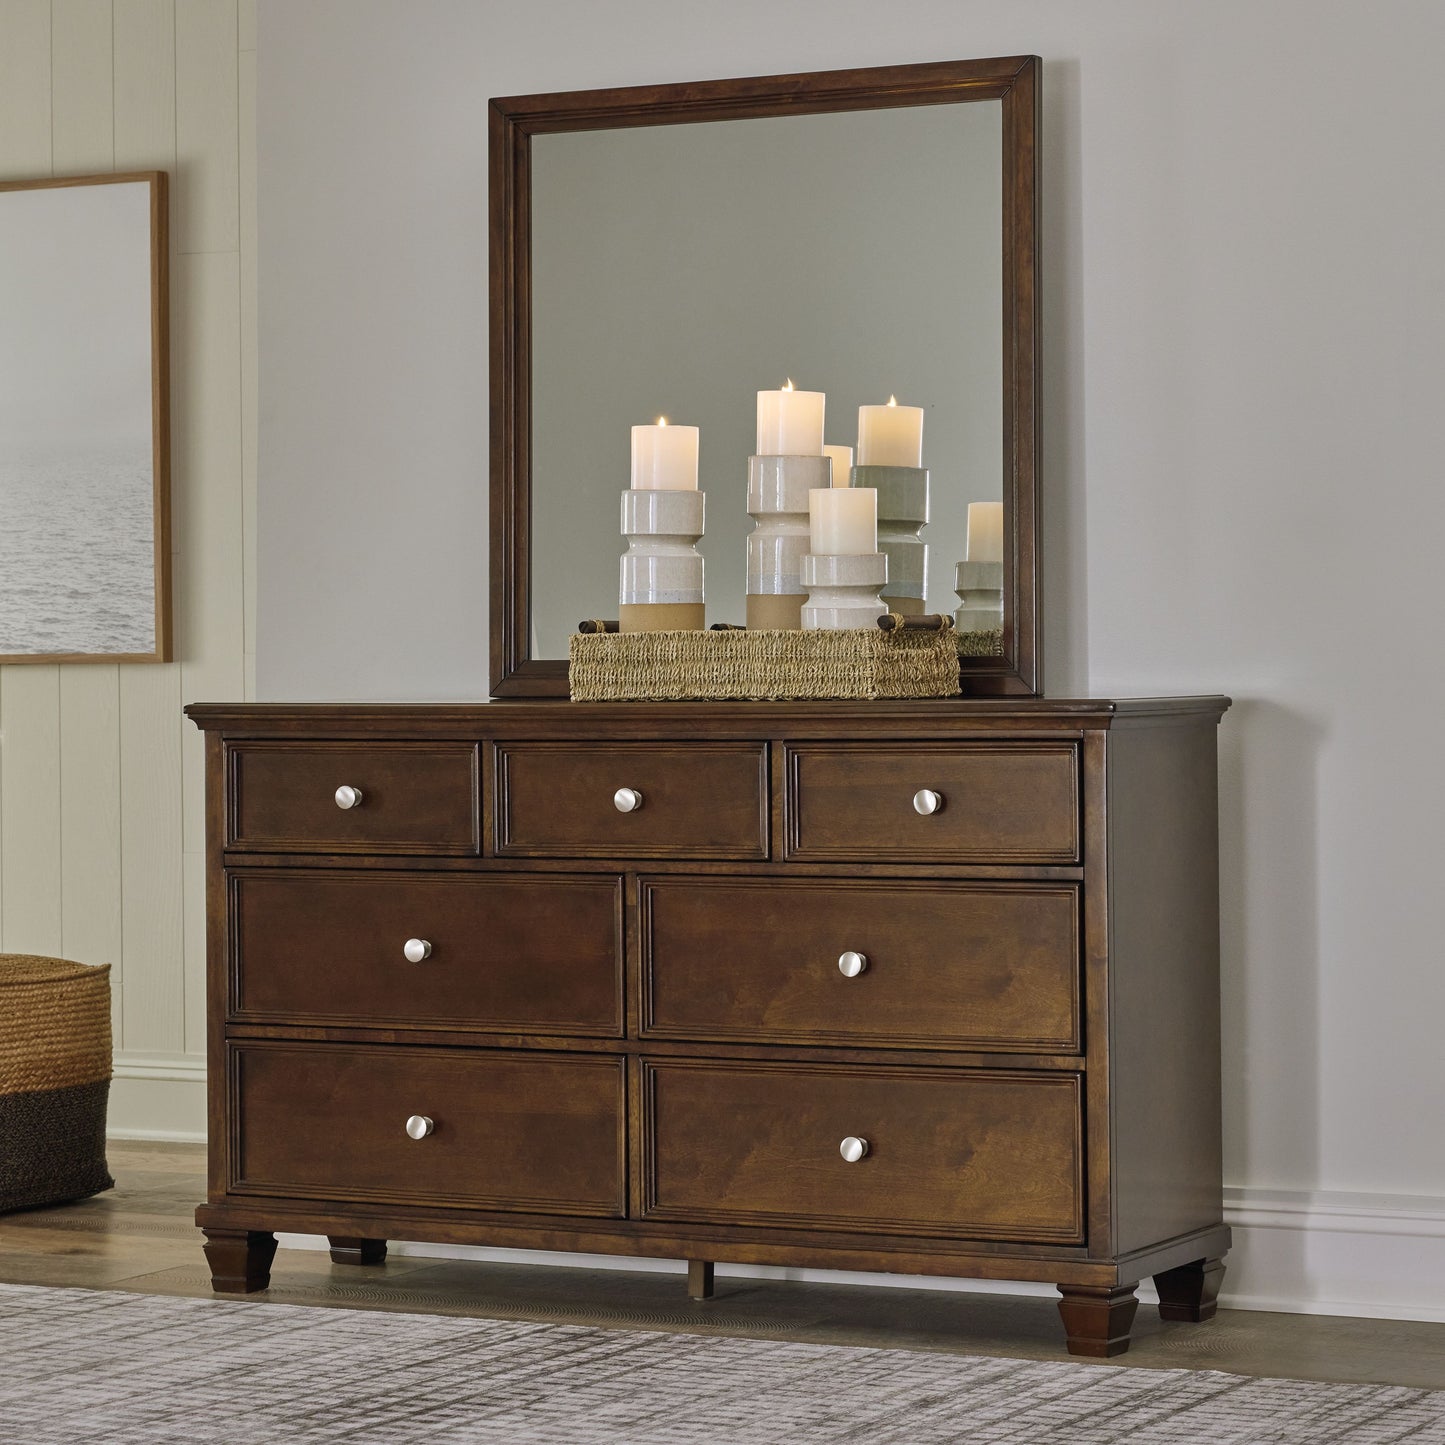 Danabrin - Brown - 8 Pc. - Dresser, Mirror, Chest, Queen Panel Bed, 2 Nightstands